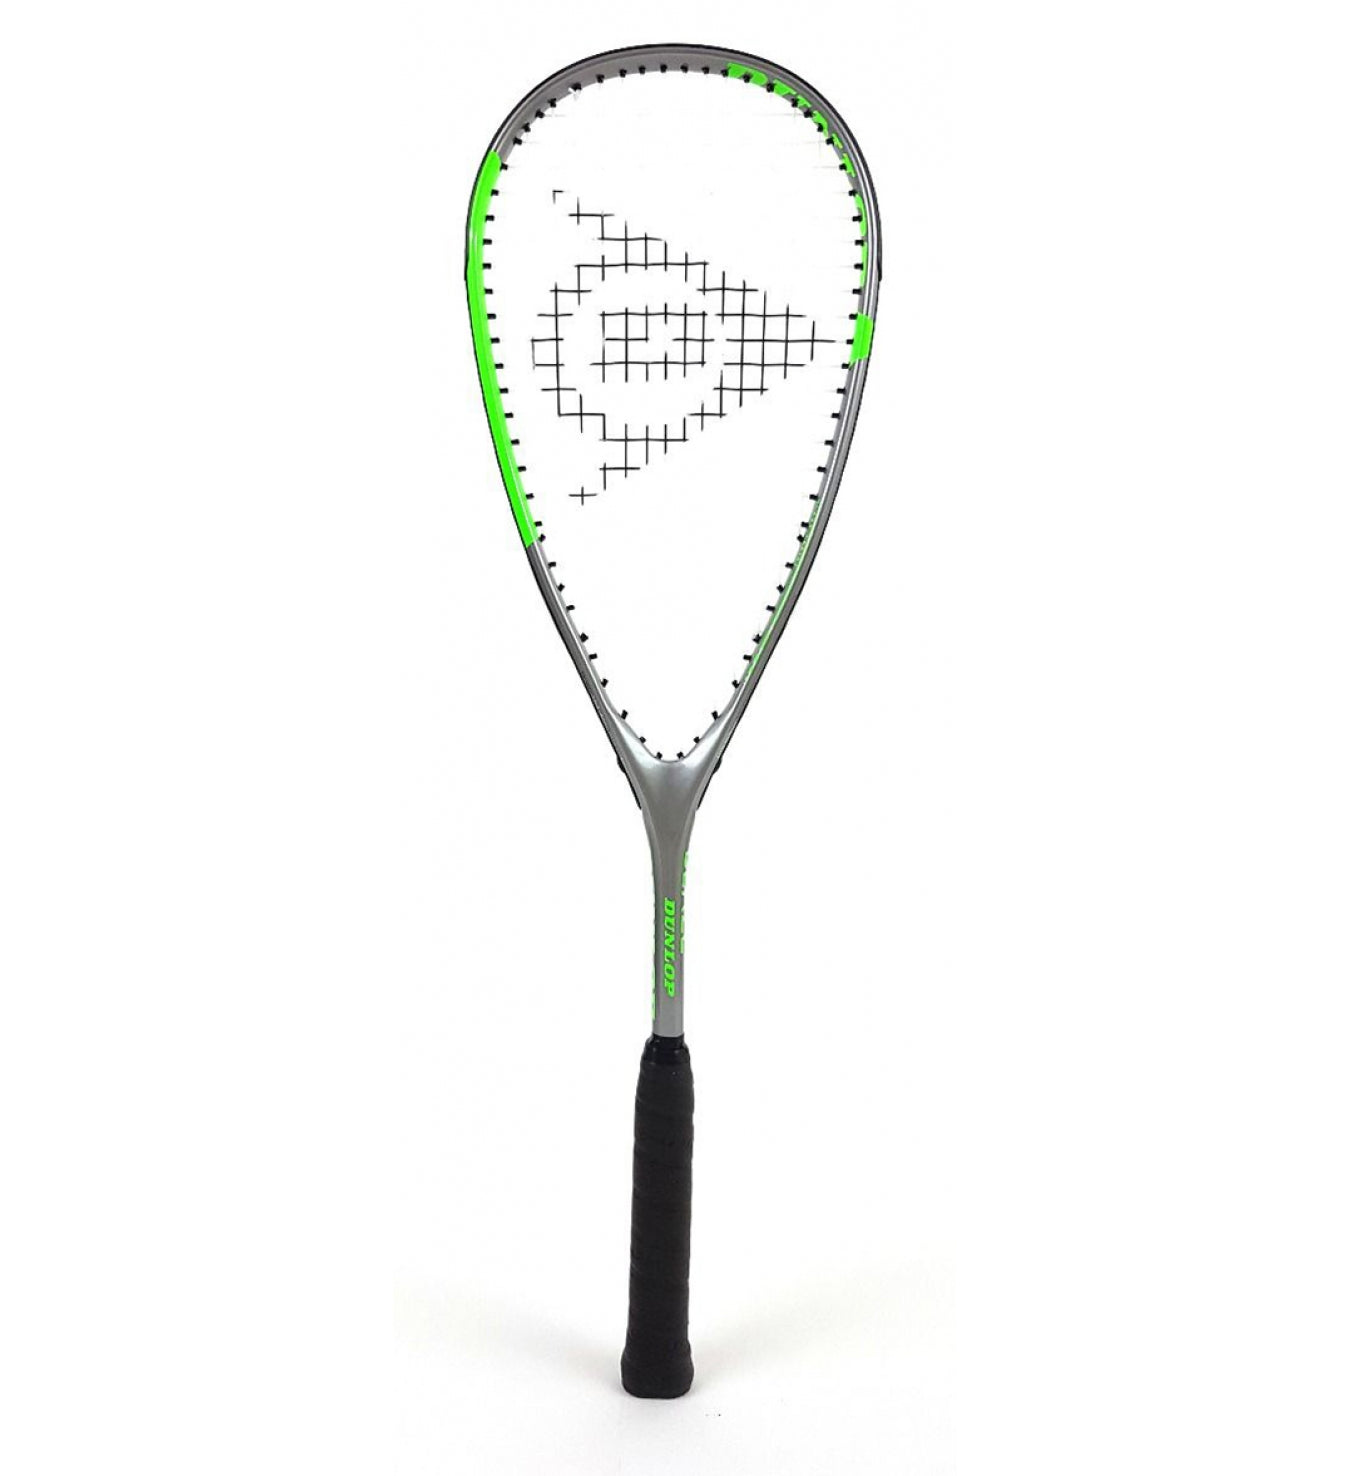 Blaze Pro 4.0 Squash Racket